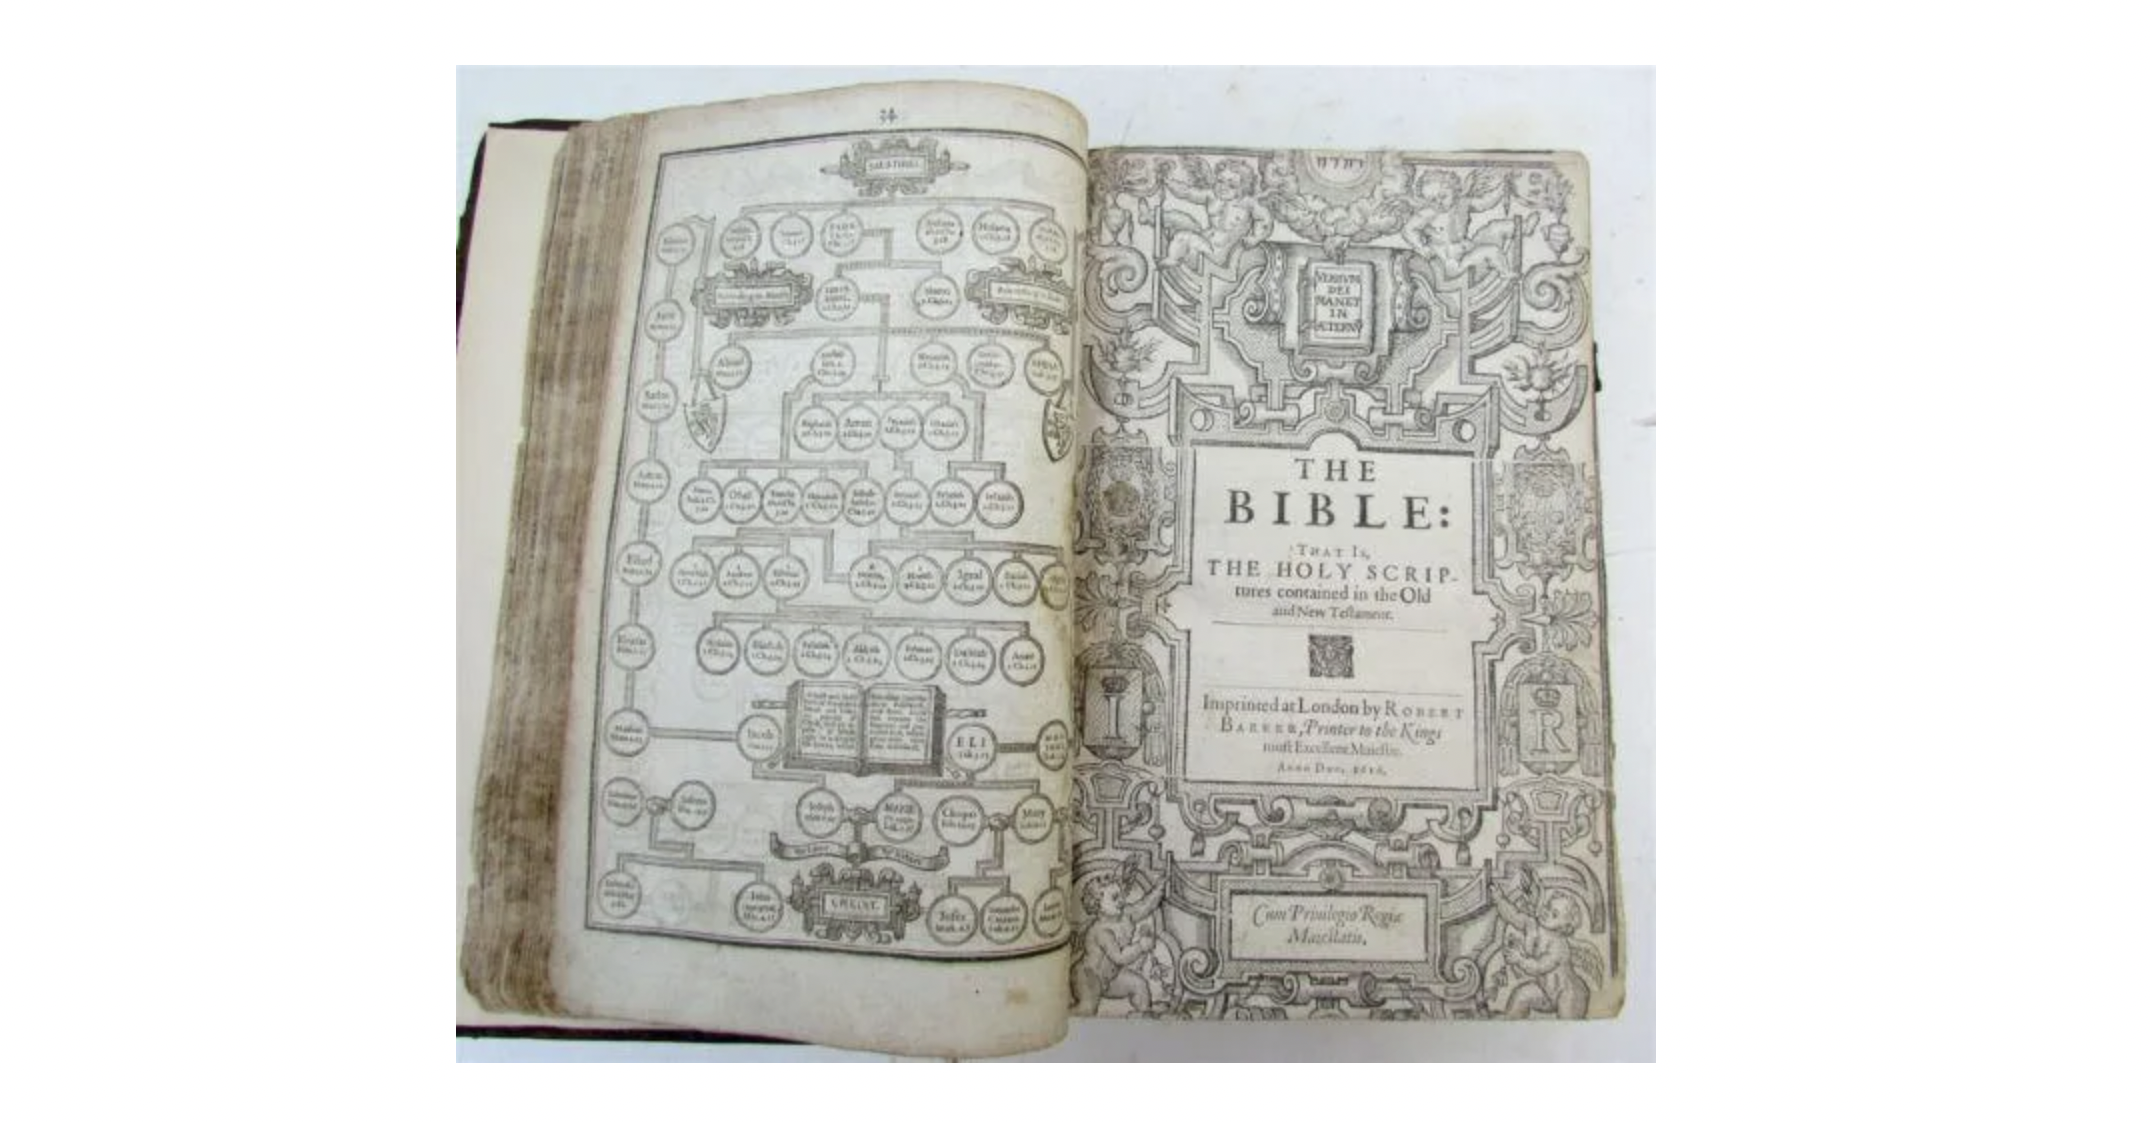 1616 copy of the Geneva version of the Bible, est. $3,500-$4,000